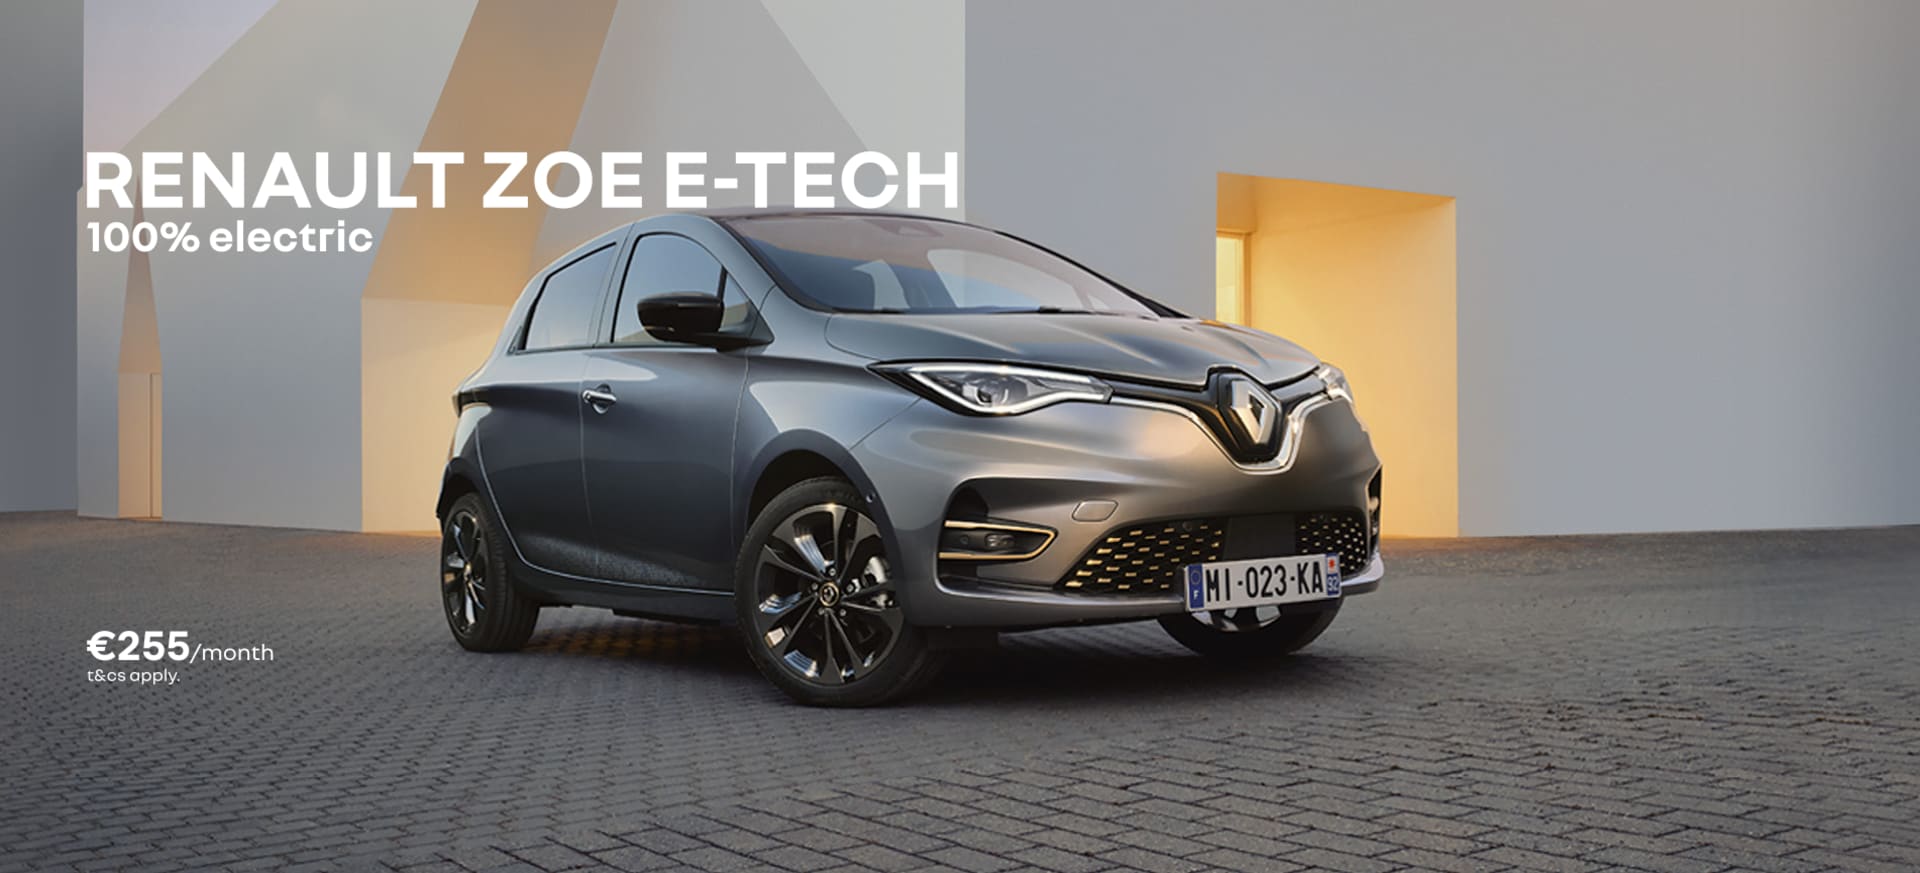 Renault Zoe E-tech future is here